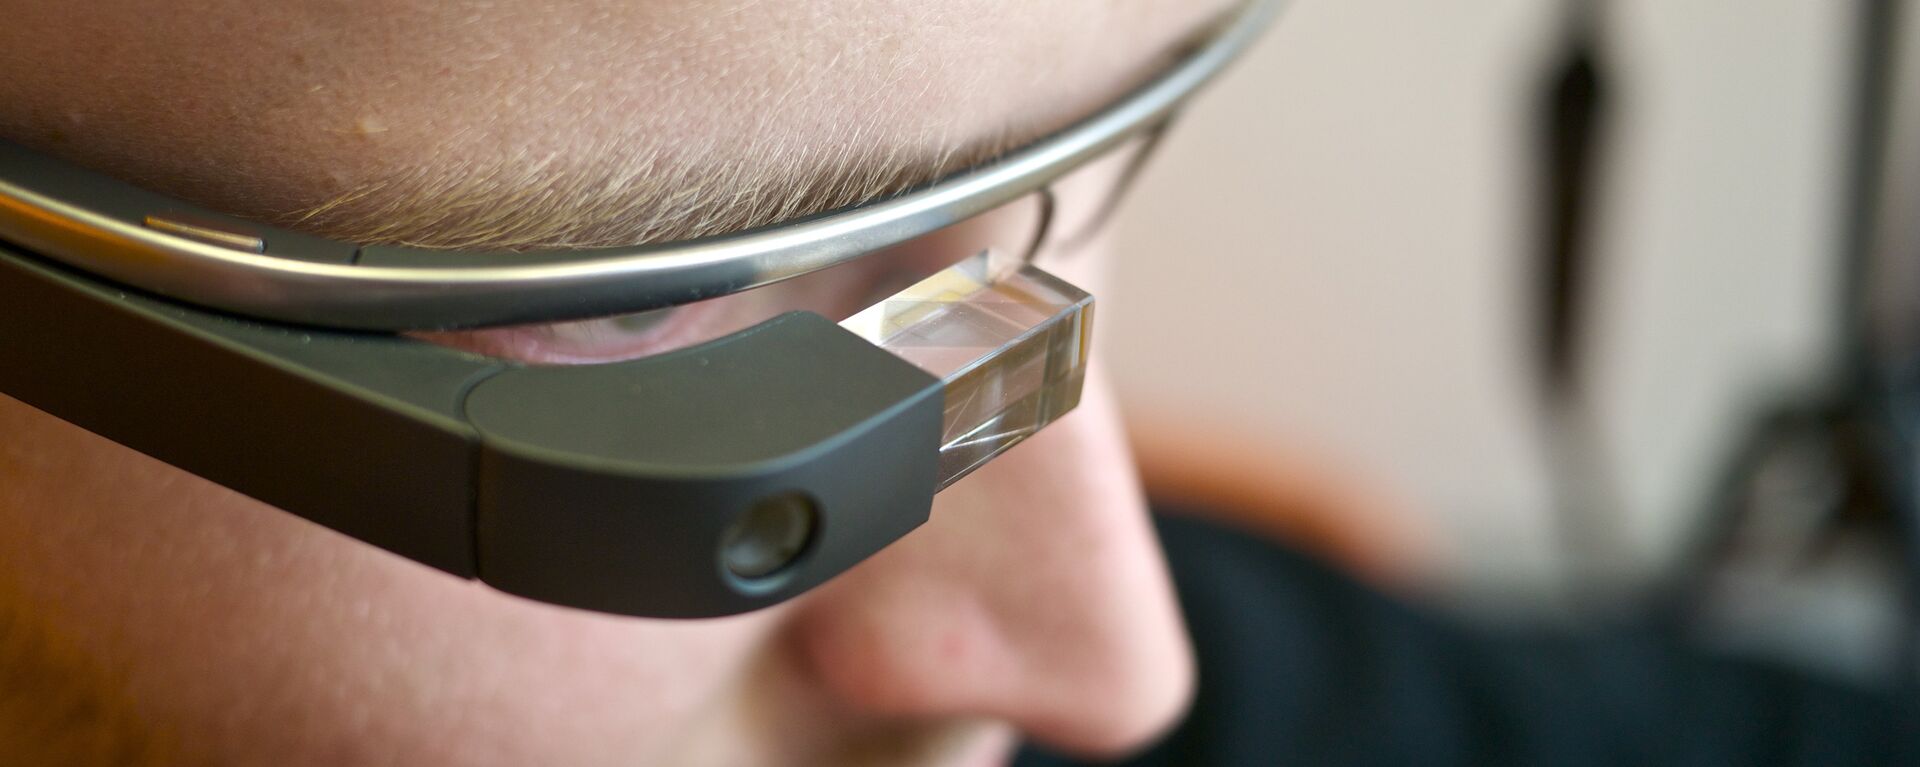 Las gafas inteligentes Google Glass - Sputnik Mundo, 1920, 18.07.2017